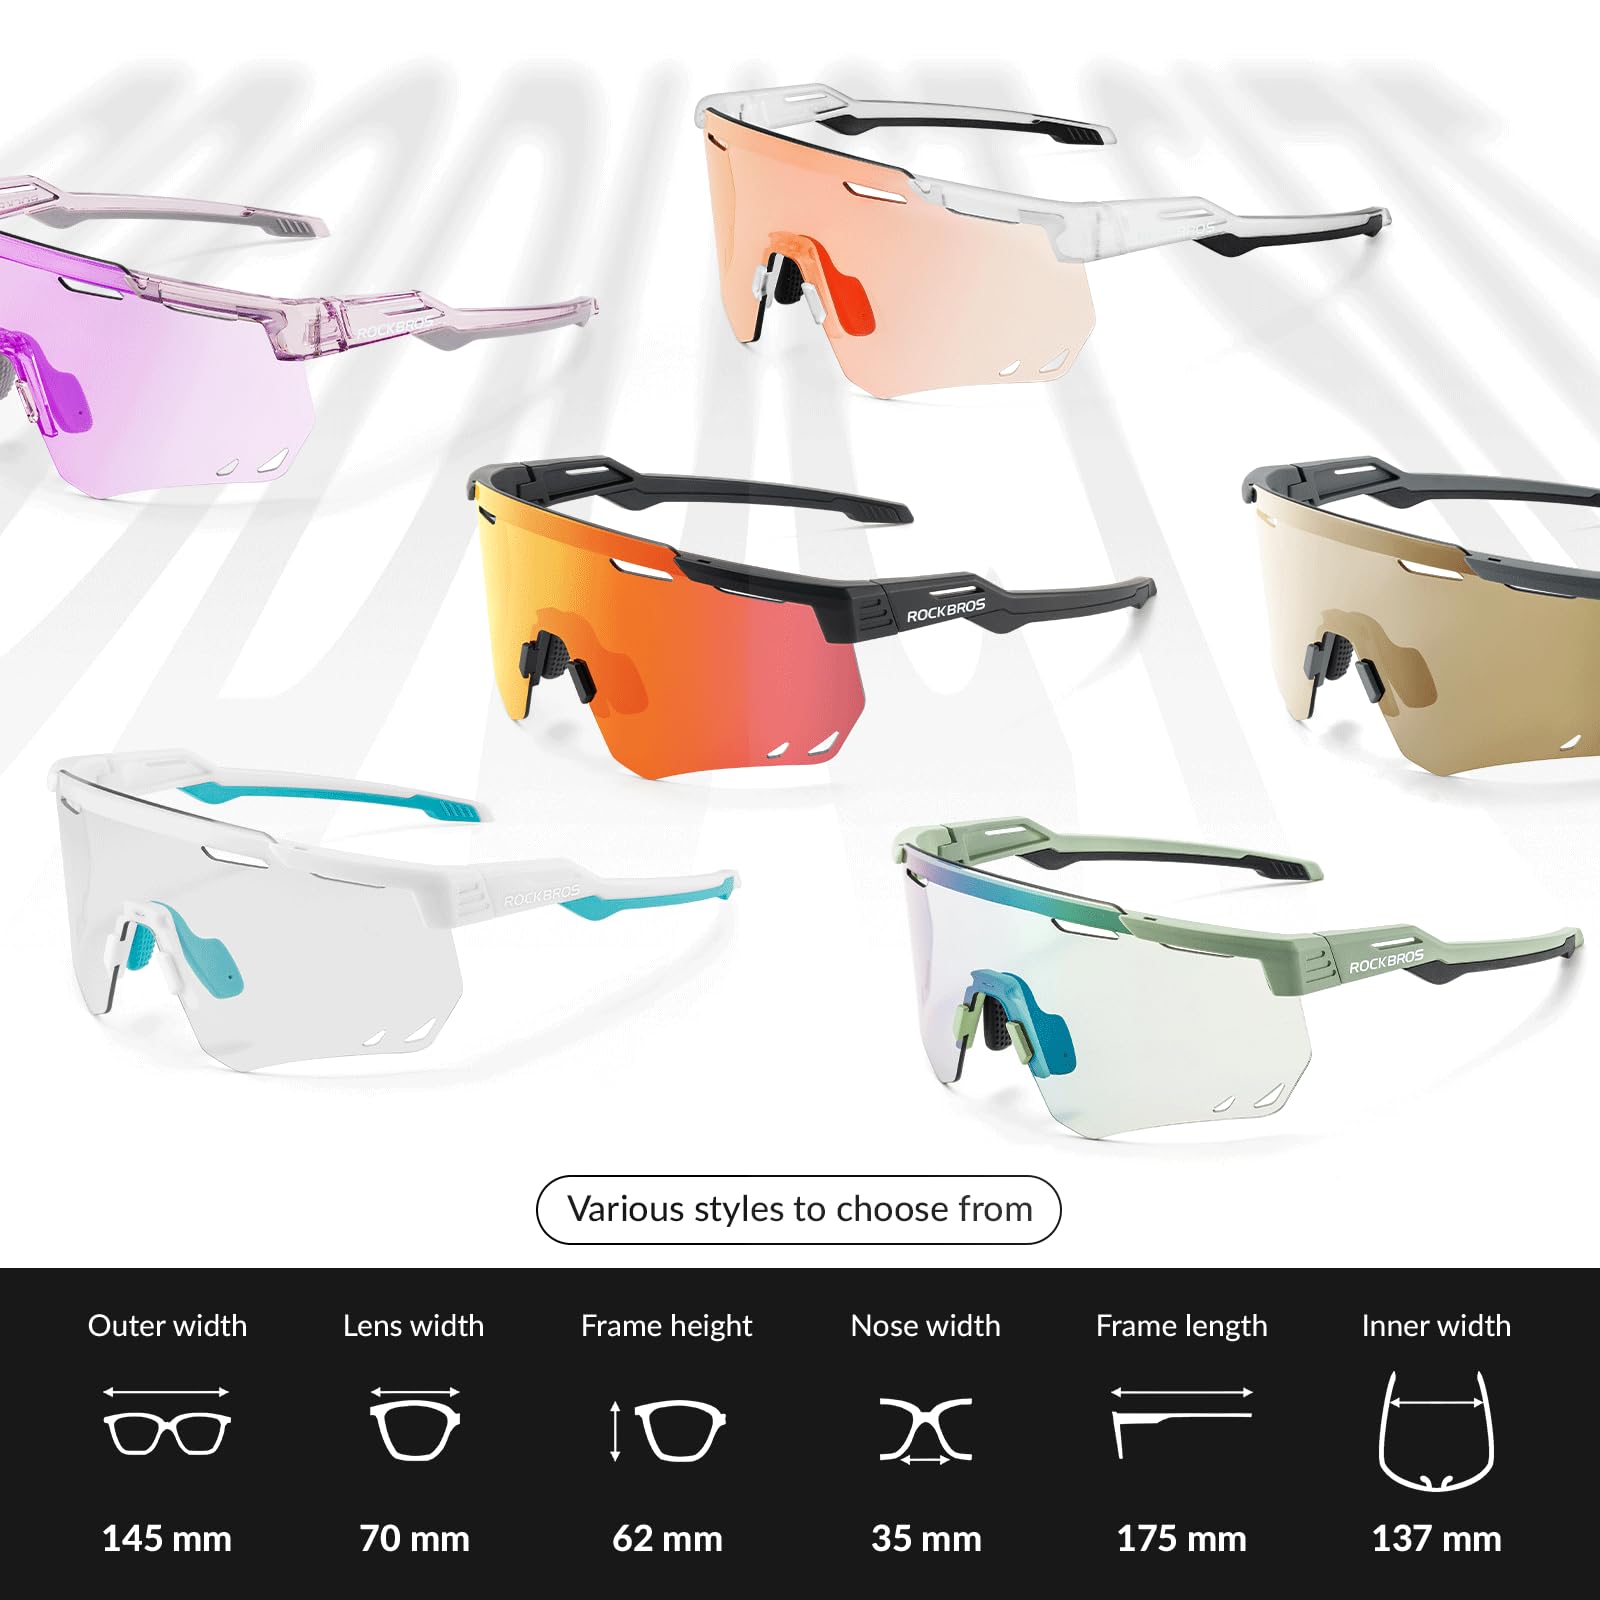 ROCKBROS Polarized Sunglasses 100% UV400 Protection Cycling Glasses #Color_Black